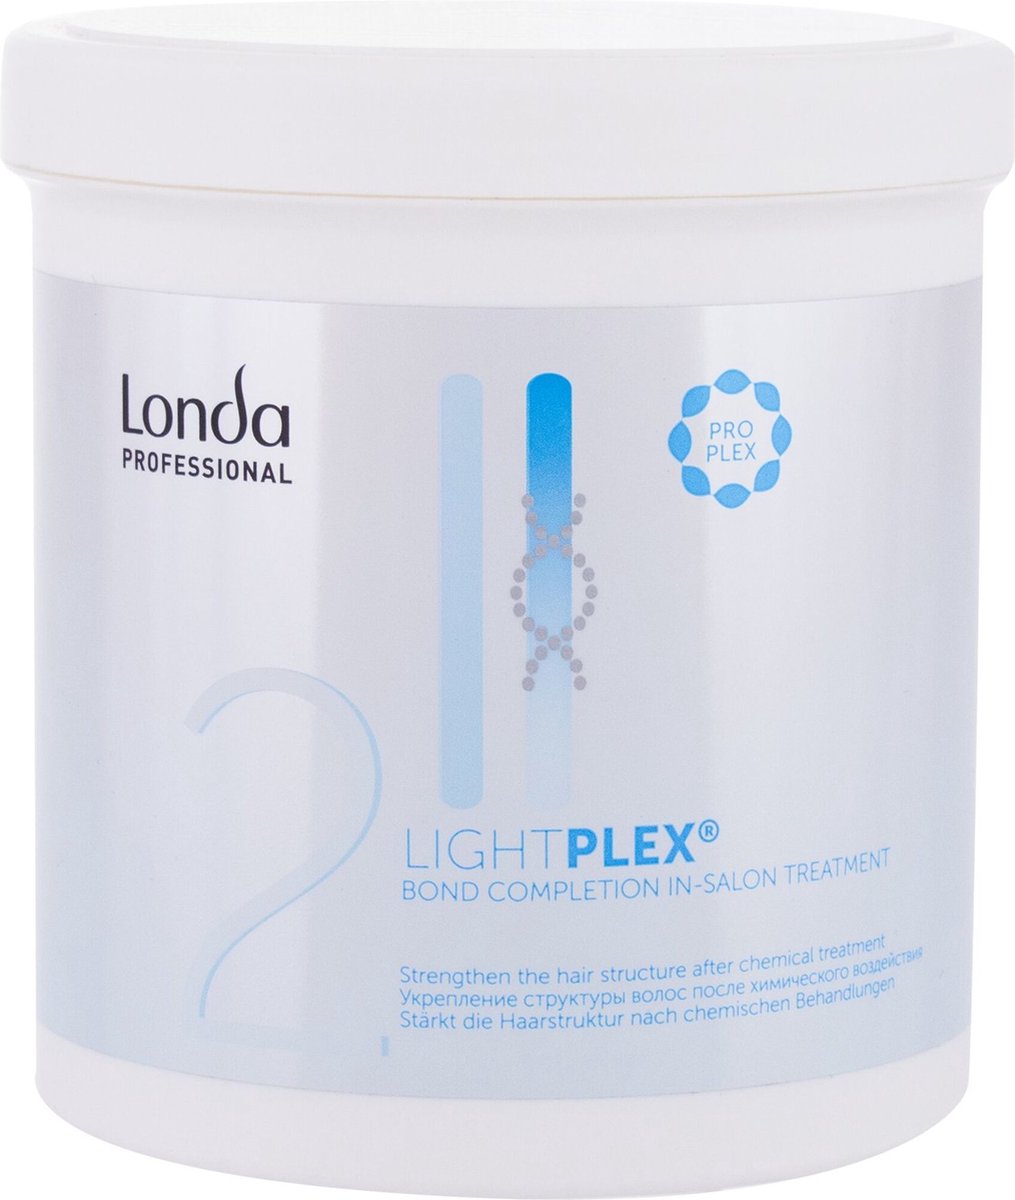 Londa Light Plex No 2 Bond Completion Treatment, 750 Ml